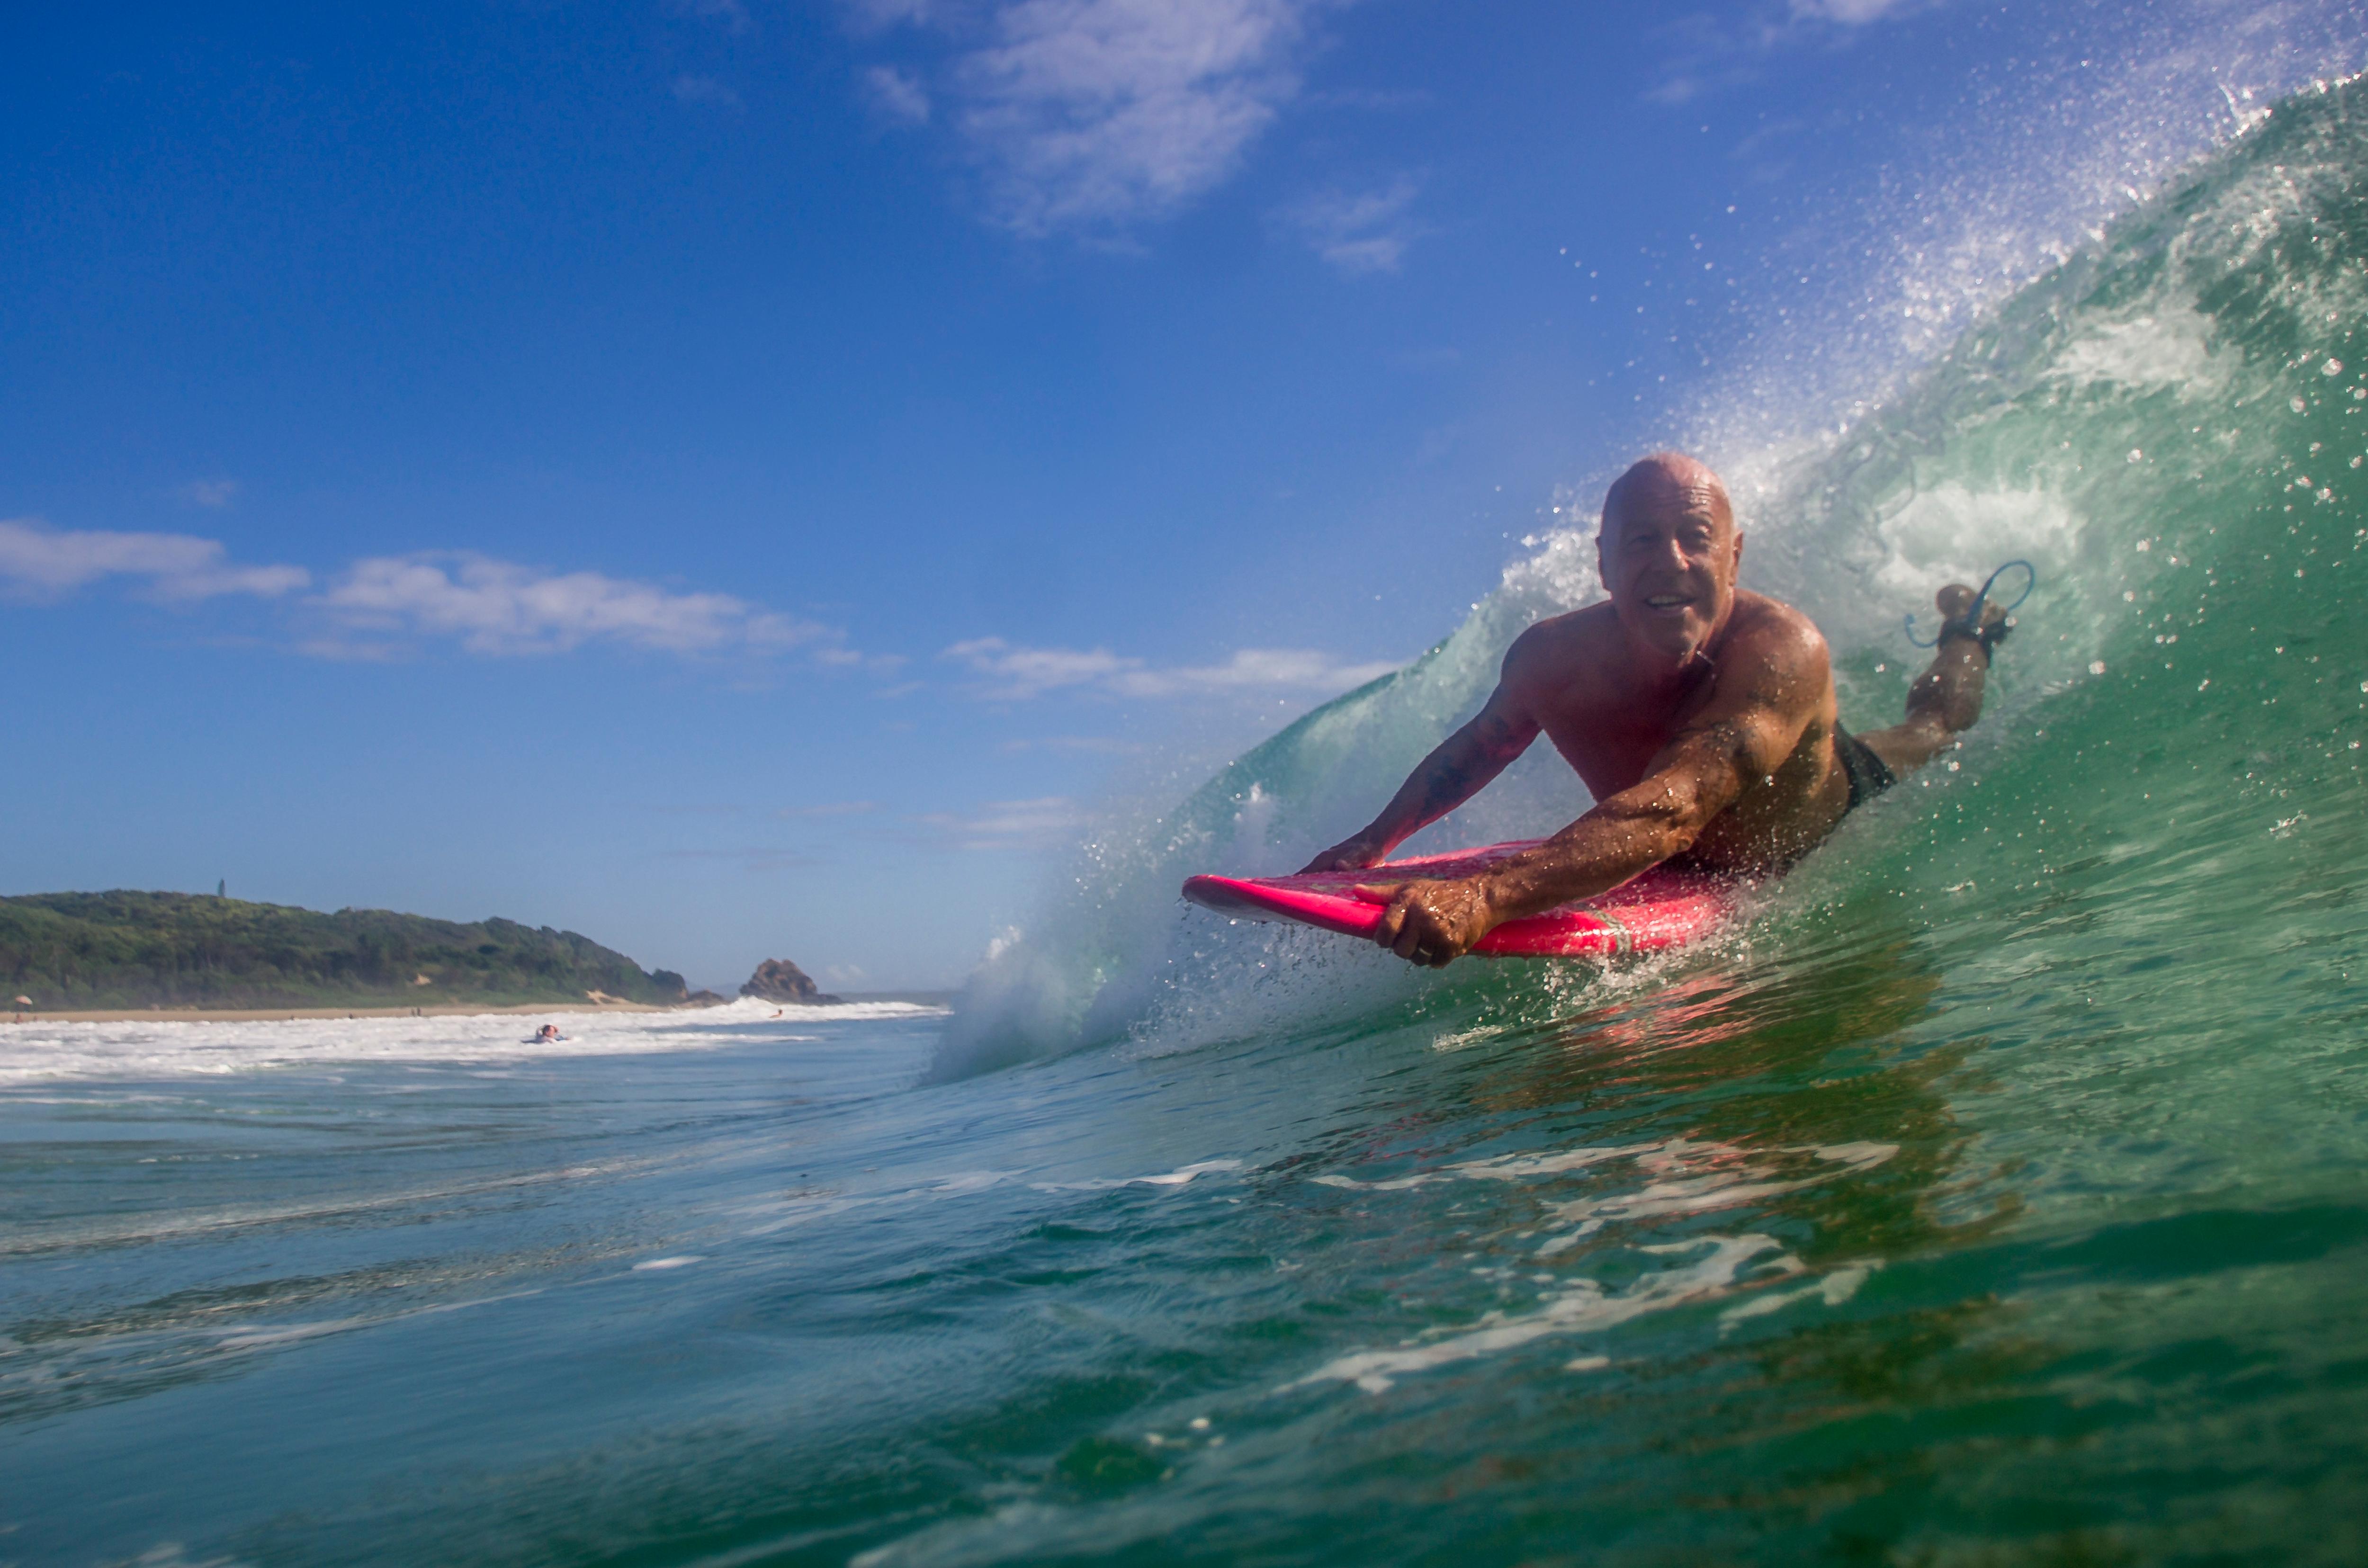 Gut slider' laydown surfboard gets senior